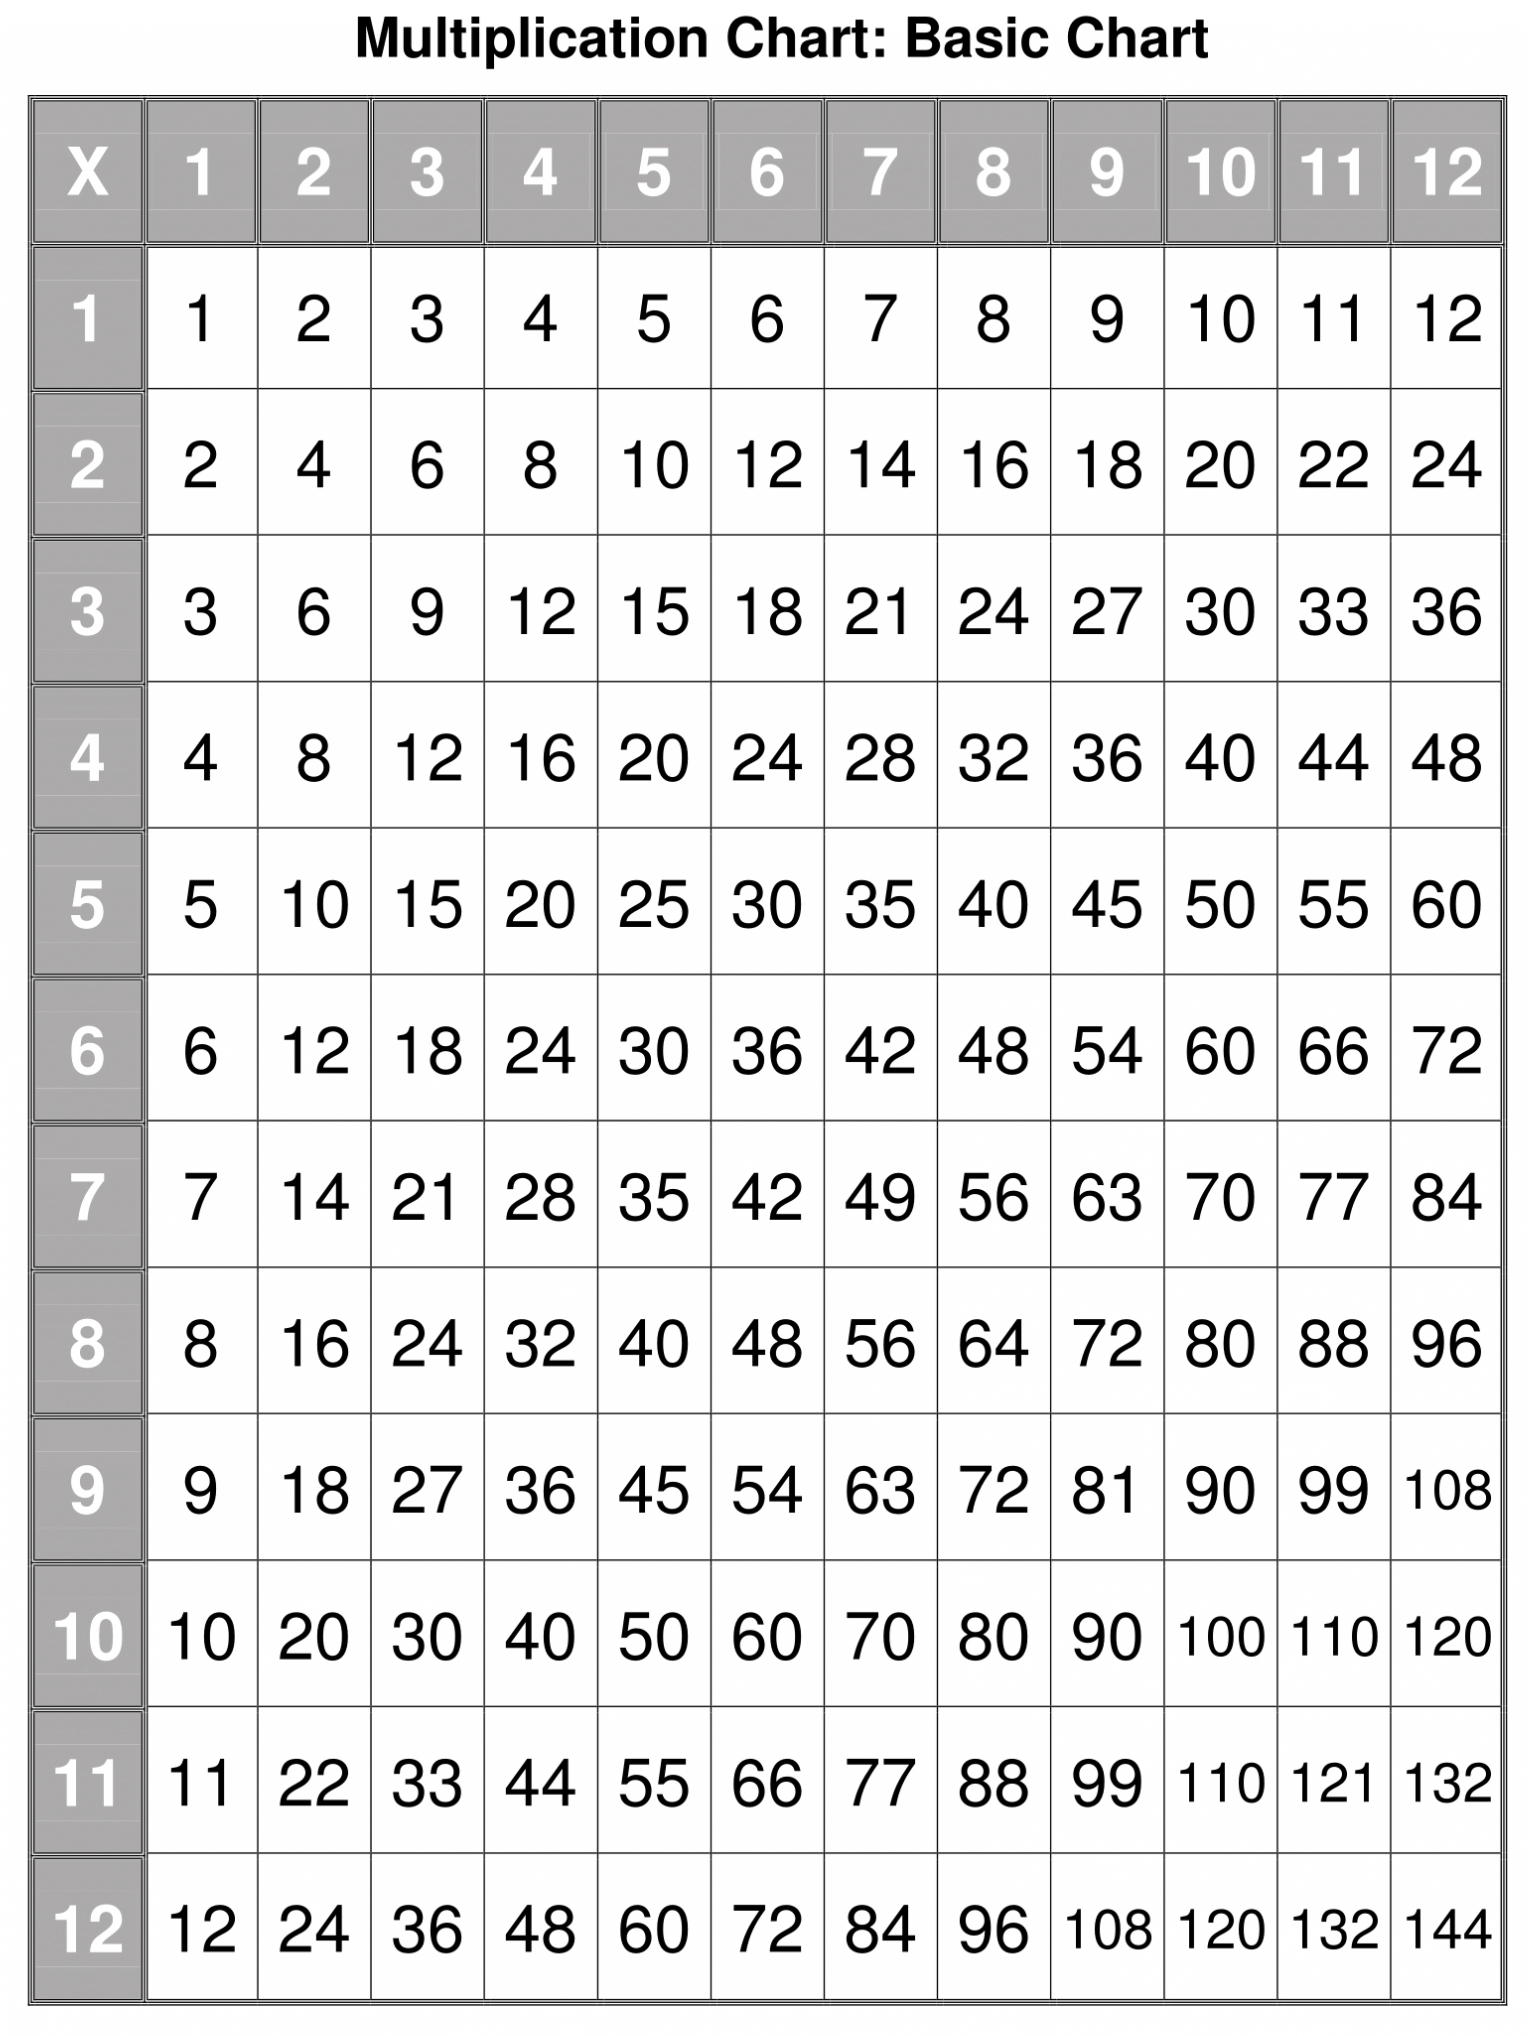 printable-multiplication-chart-1-12-printablemultiplication